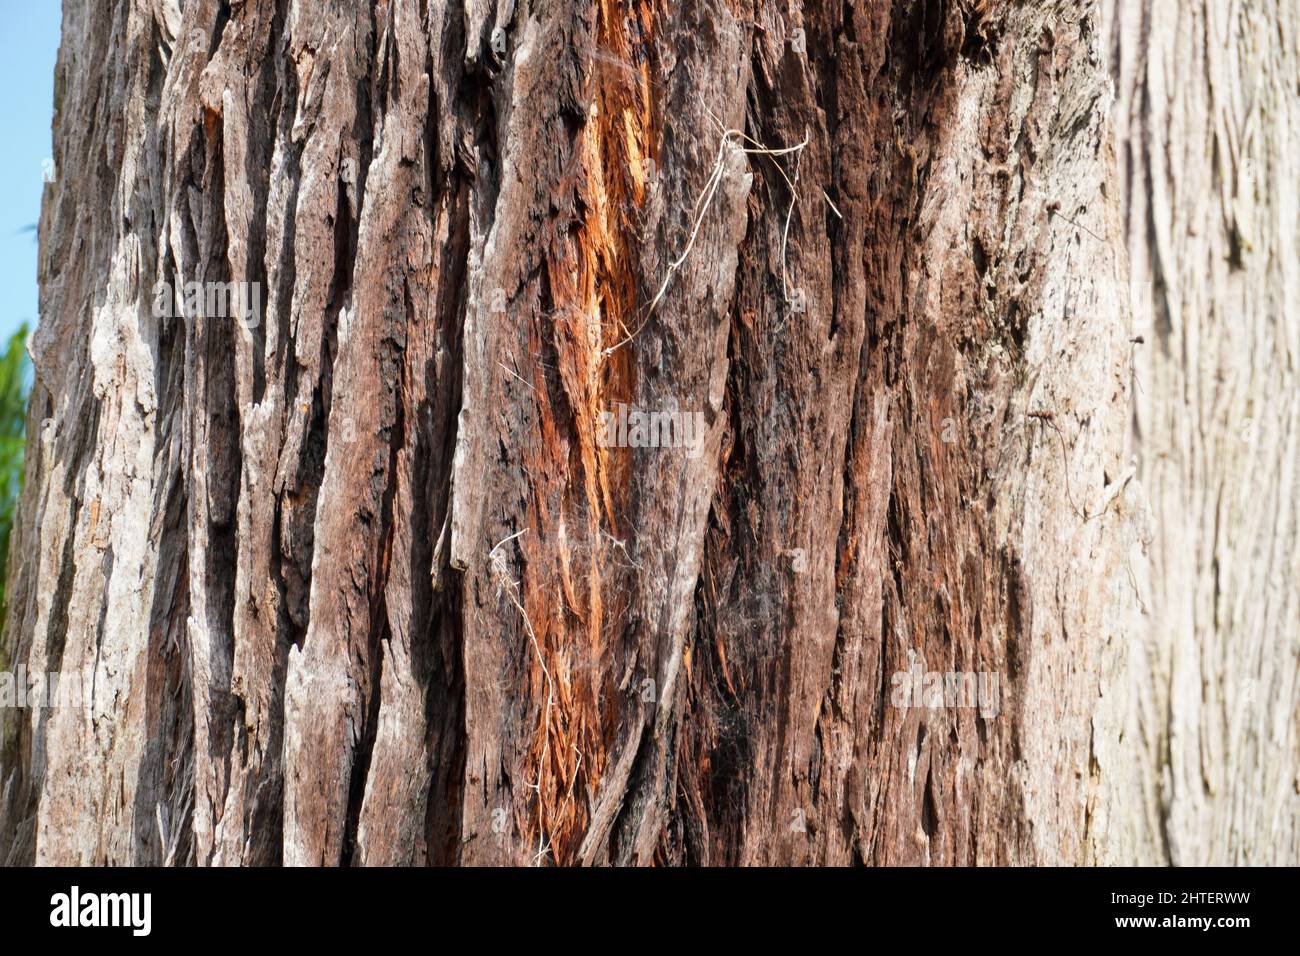 Closeup shot of tembusu tree trunk texture under a blue sky Stock Photo